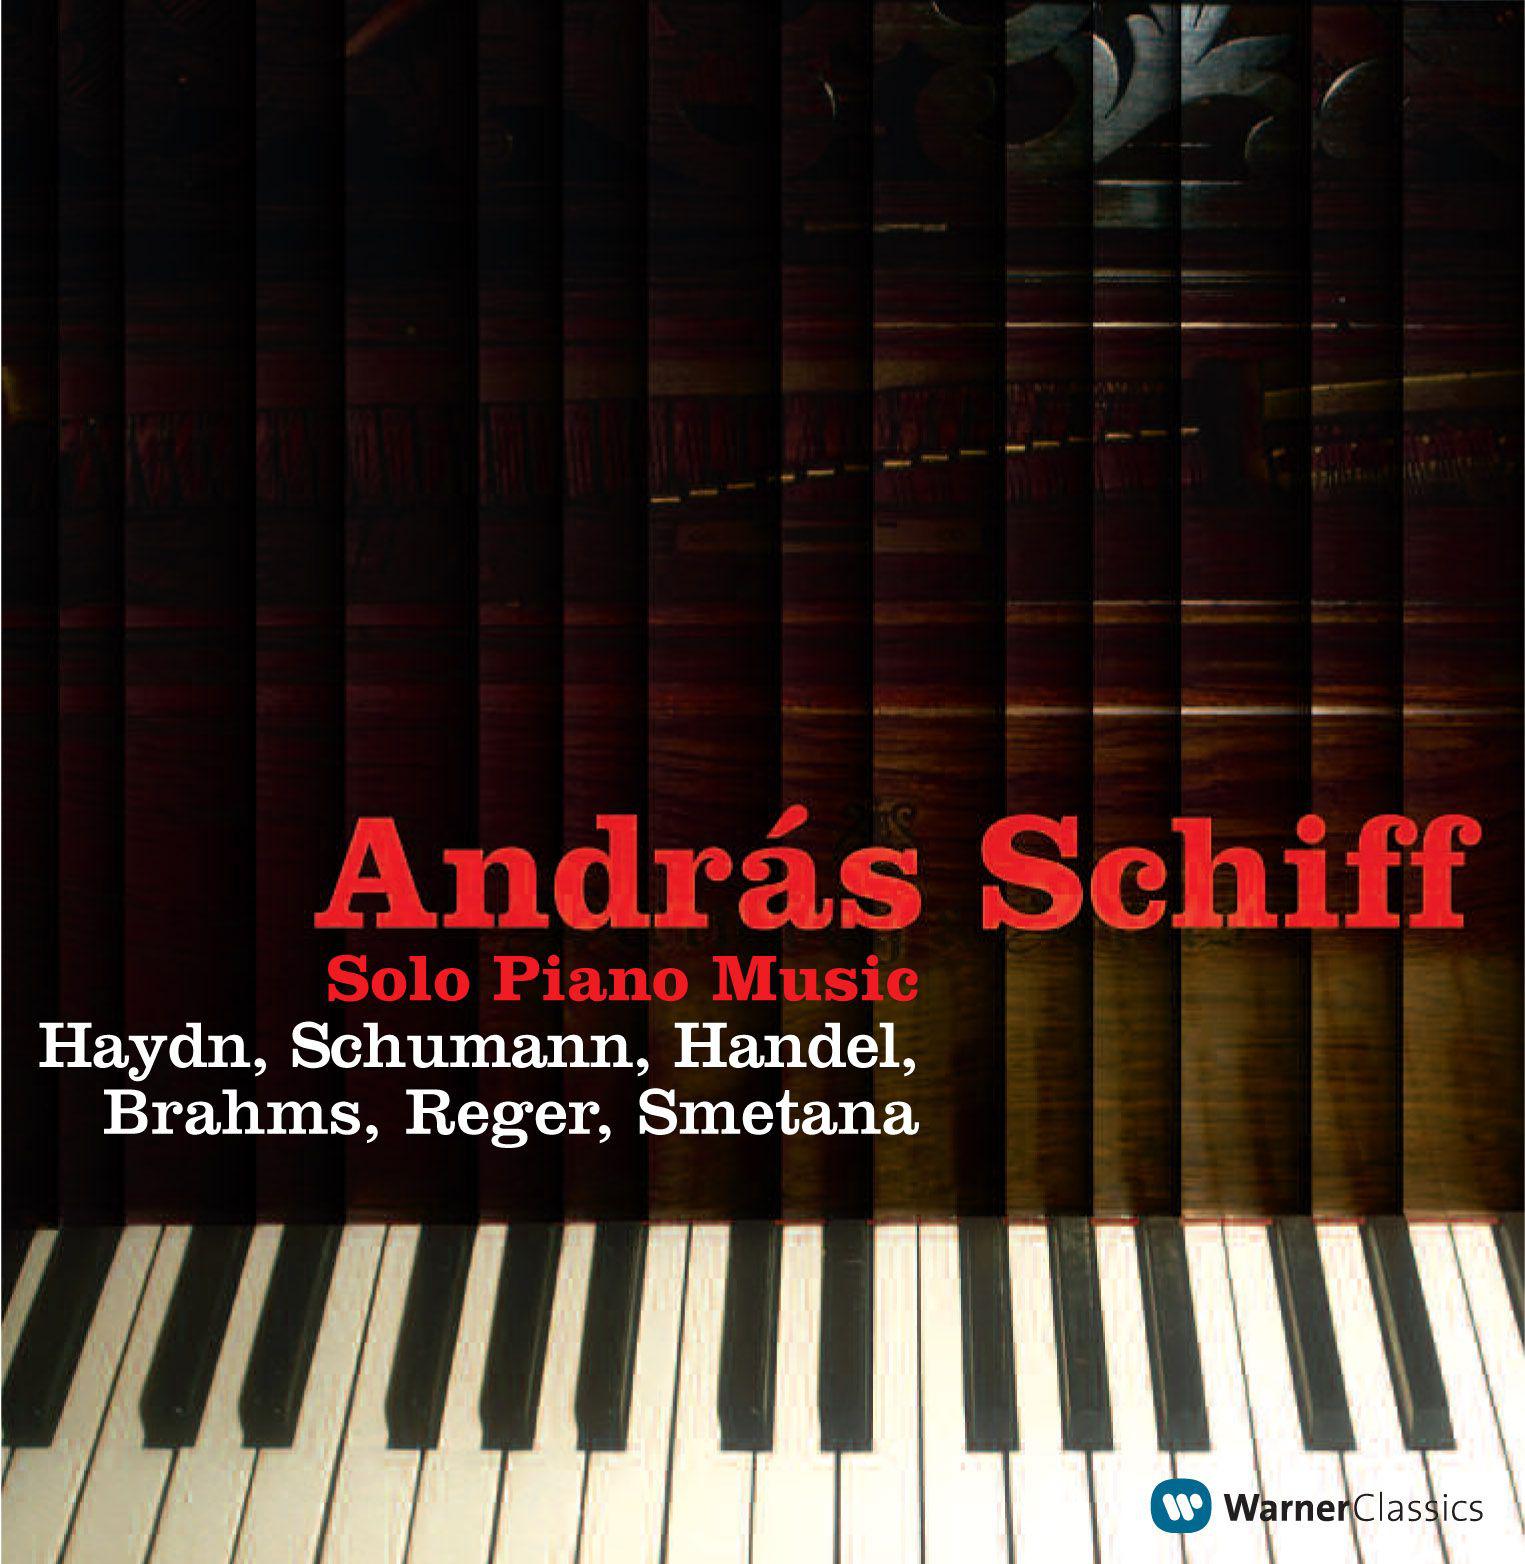 Piano Sonata in D Major, Hob. XVI:51: I. Andante